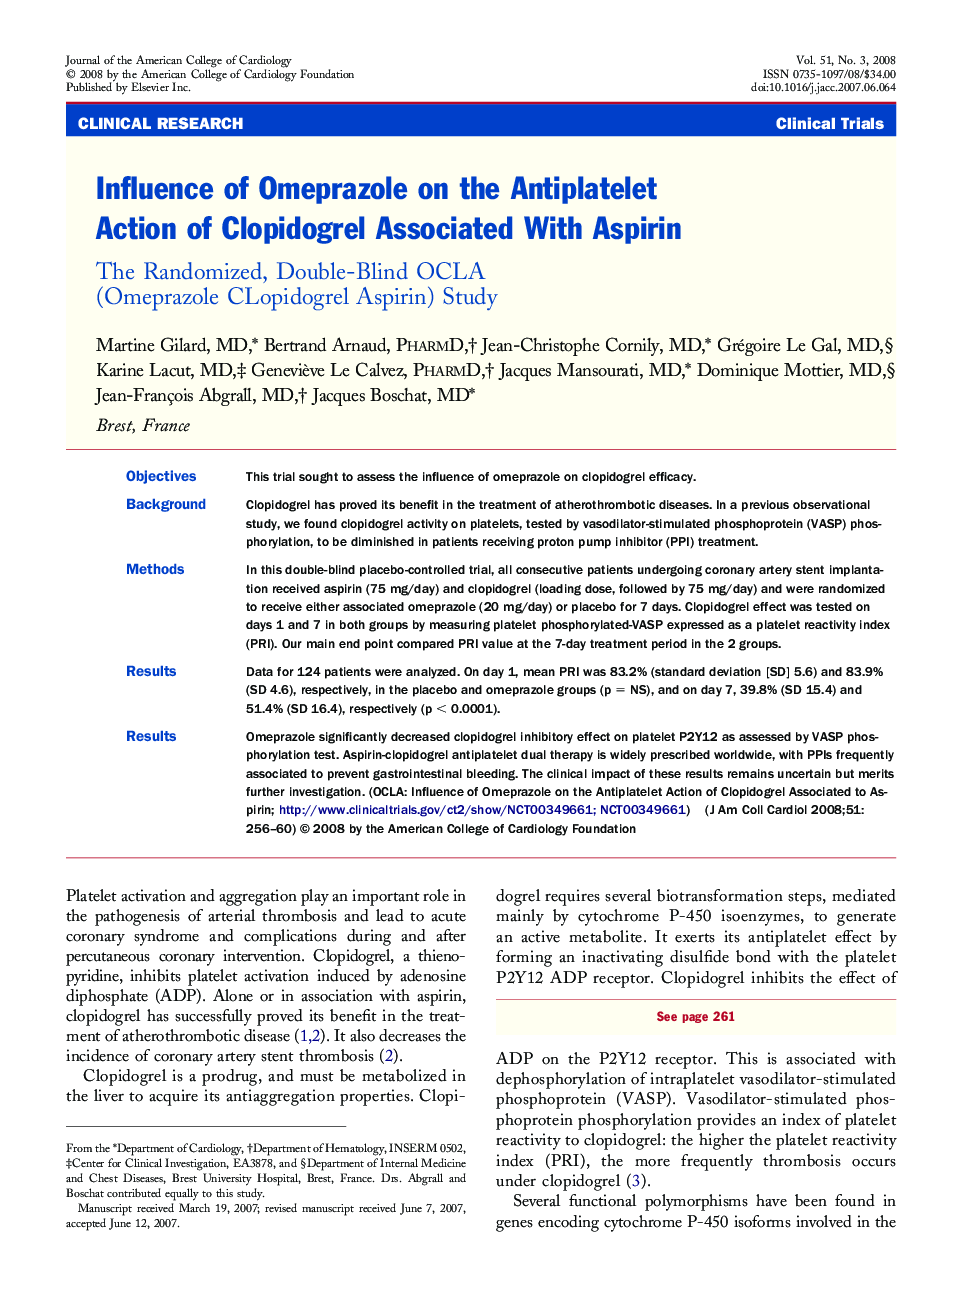 Influence of Omeprazole on the Antiplatelet Action of Clopidogrel Associated With Aspirin: The Randomized, Double-Blind OCLA (Omeprazole CLopidogrel Aspirin) Study